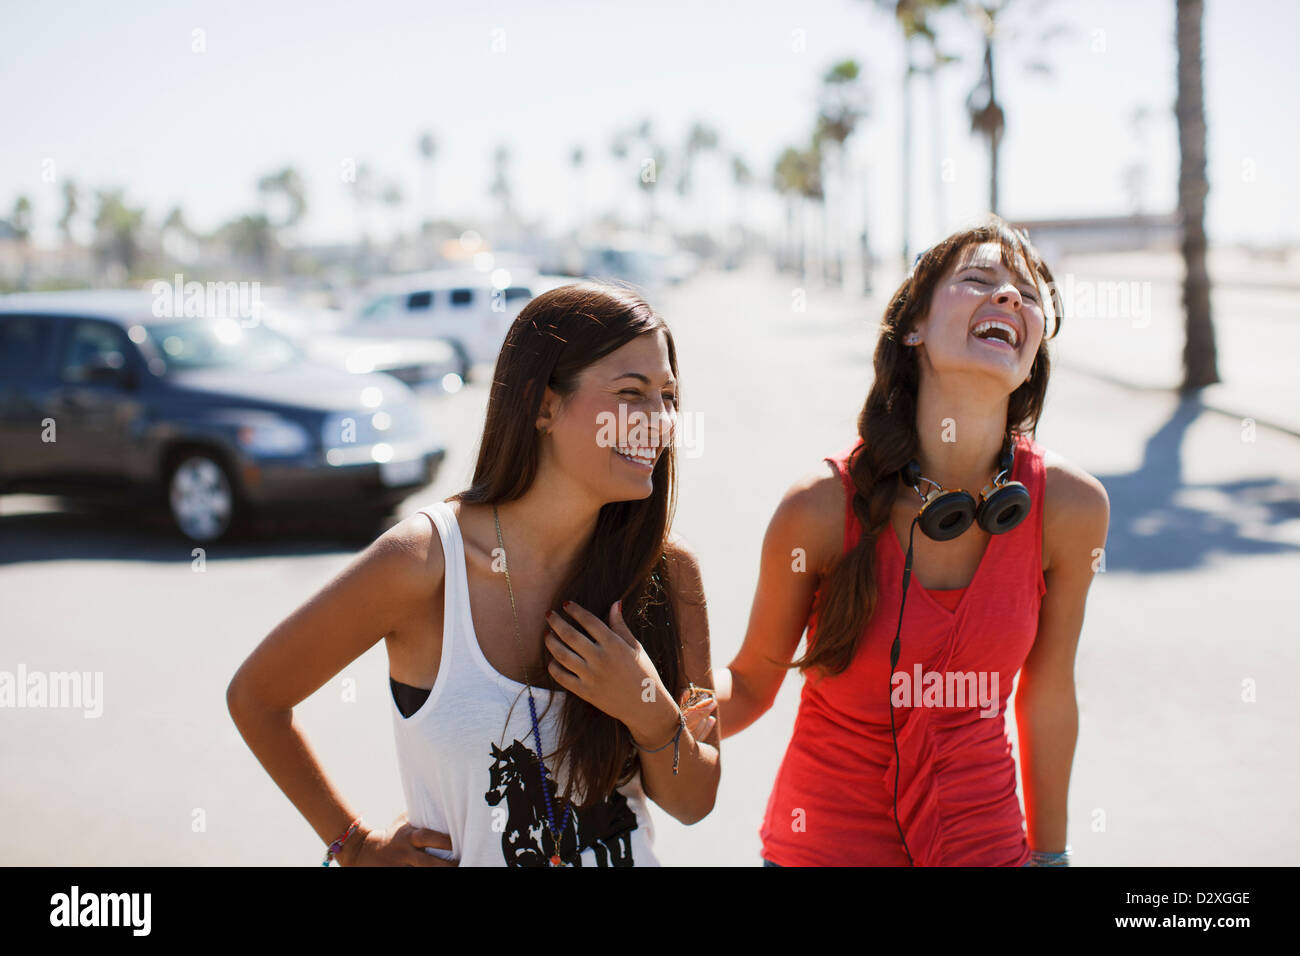 Laughing women walking outdoors Stock Photo